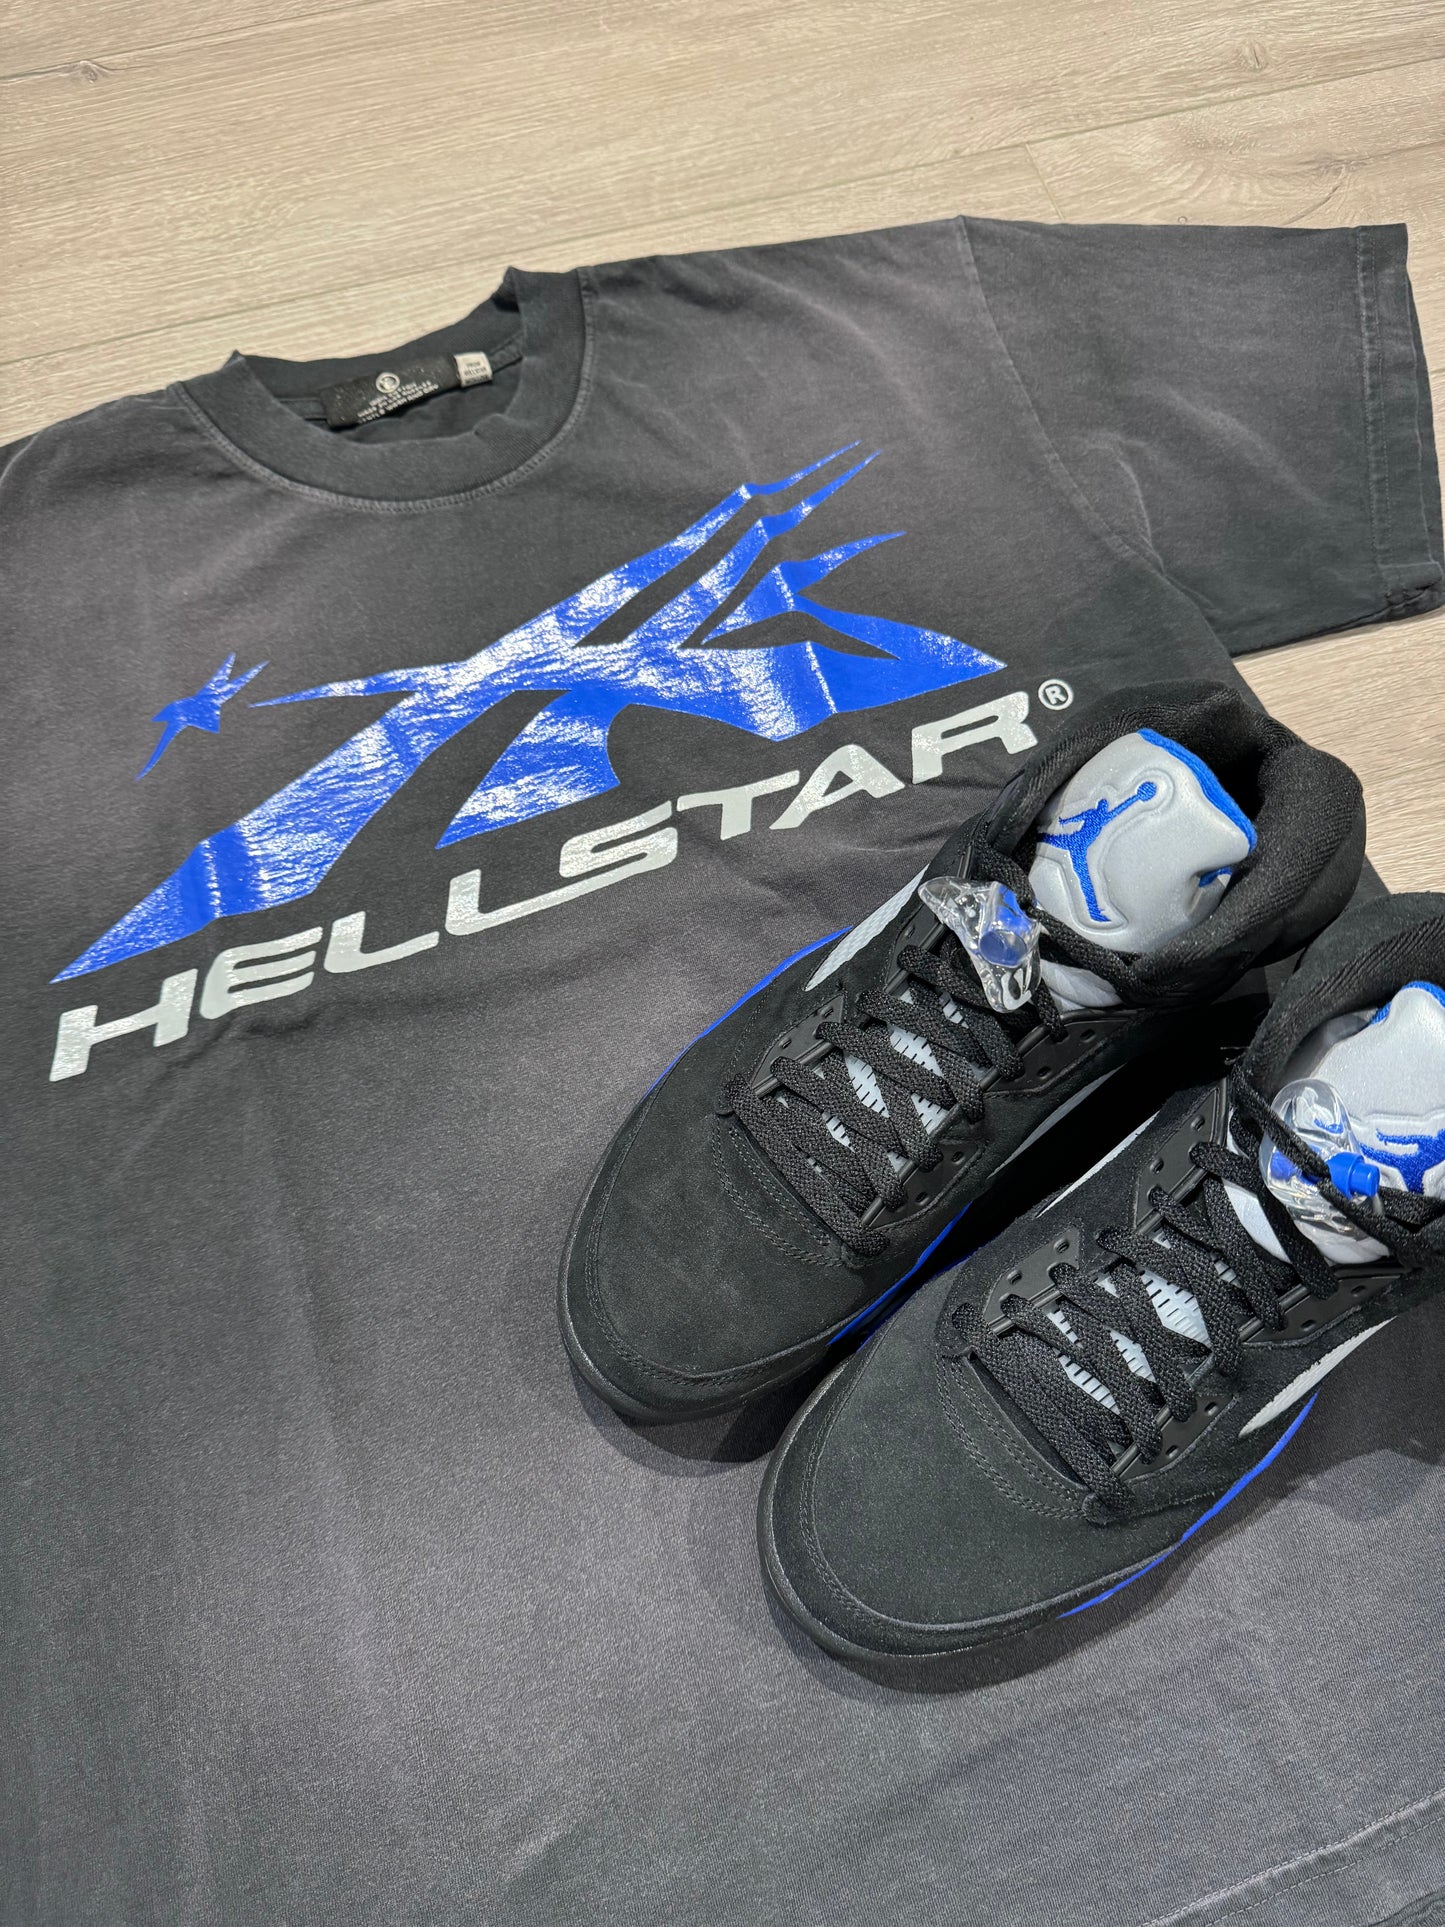 Hellstar Gel Sport Logo “Black & Blue” Tee